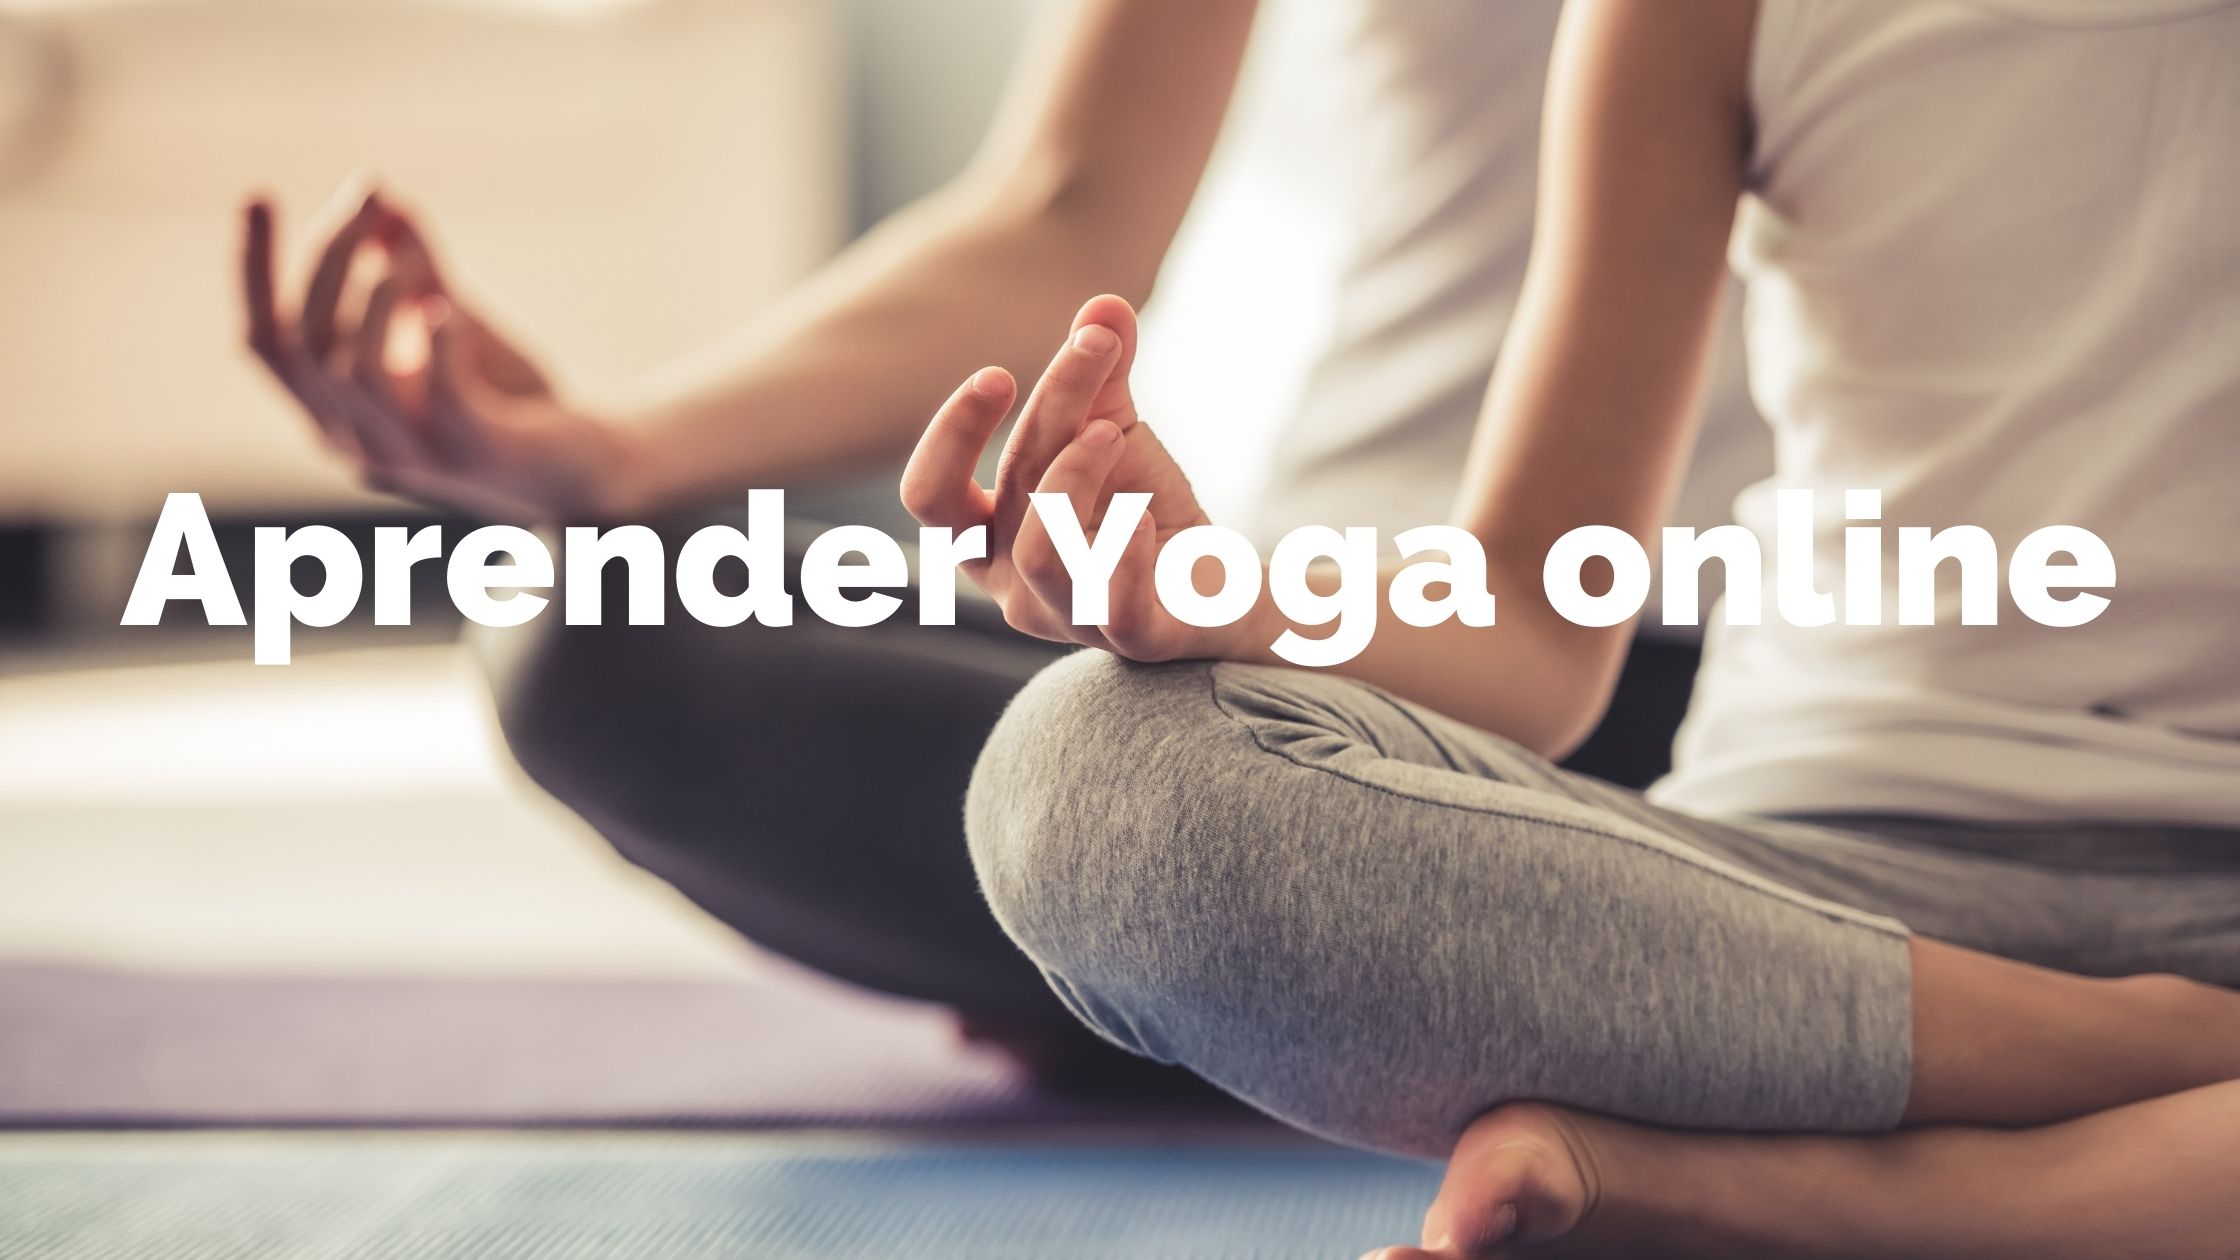 Aprender yoga online